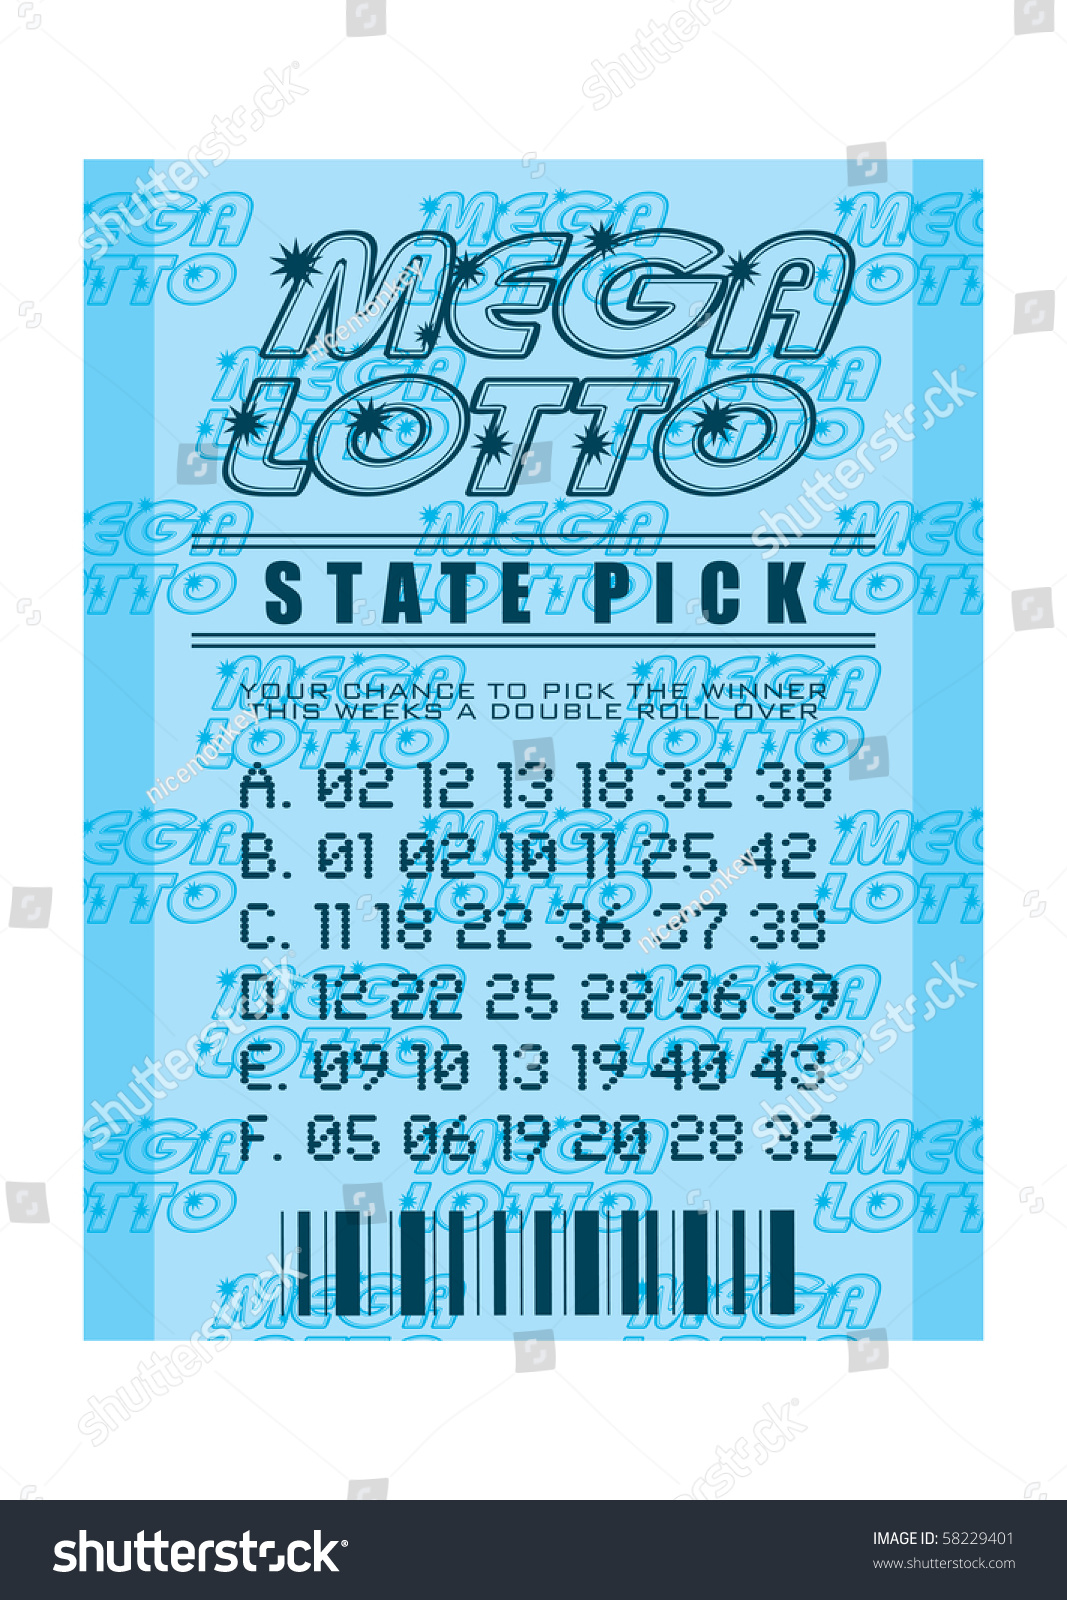 mega lotto numbers from last night